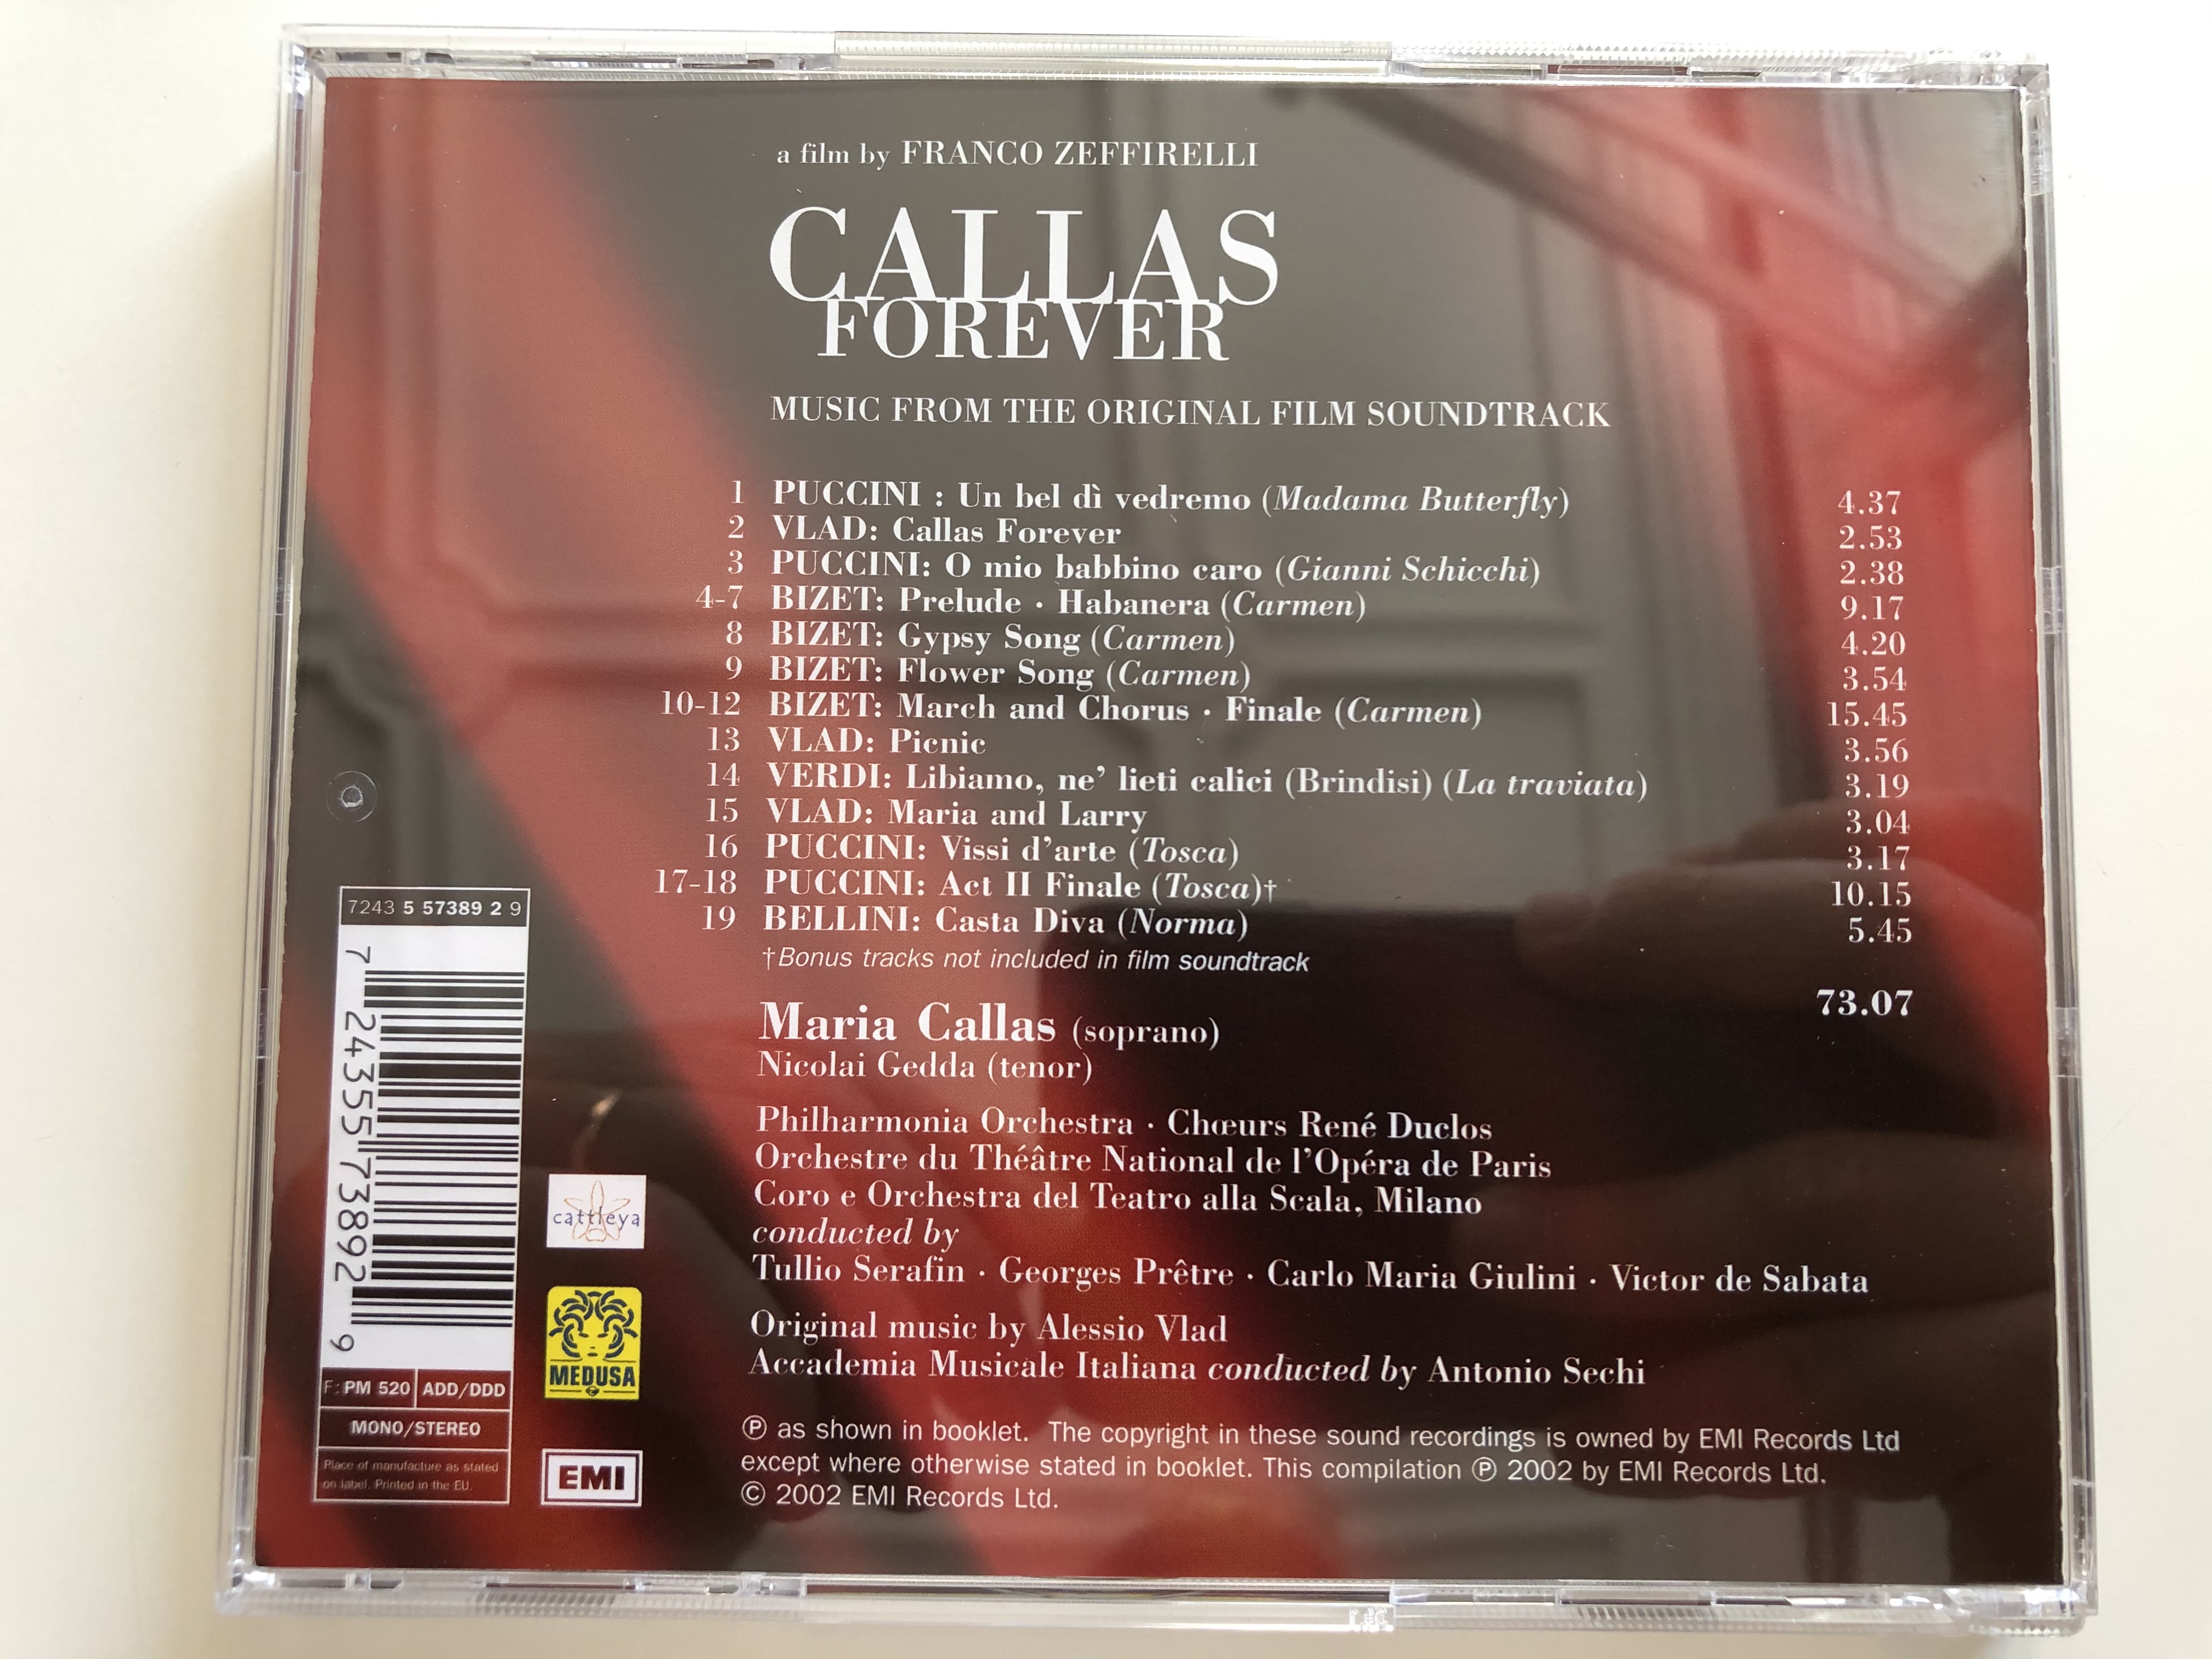 callas-forever-original-film-soundtrack-a-film-by-franco-zeffirelli-fanny-ardant-jeremy-irons-emi-audio-cd-2002-mono-stereo-5-57396-2-7-.jpg